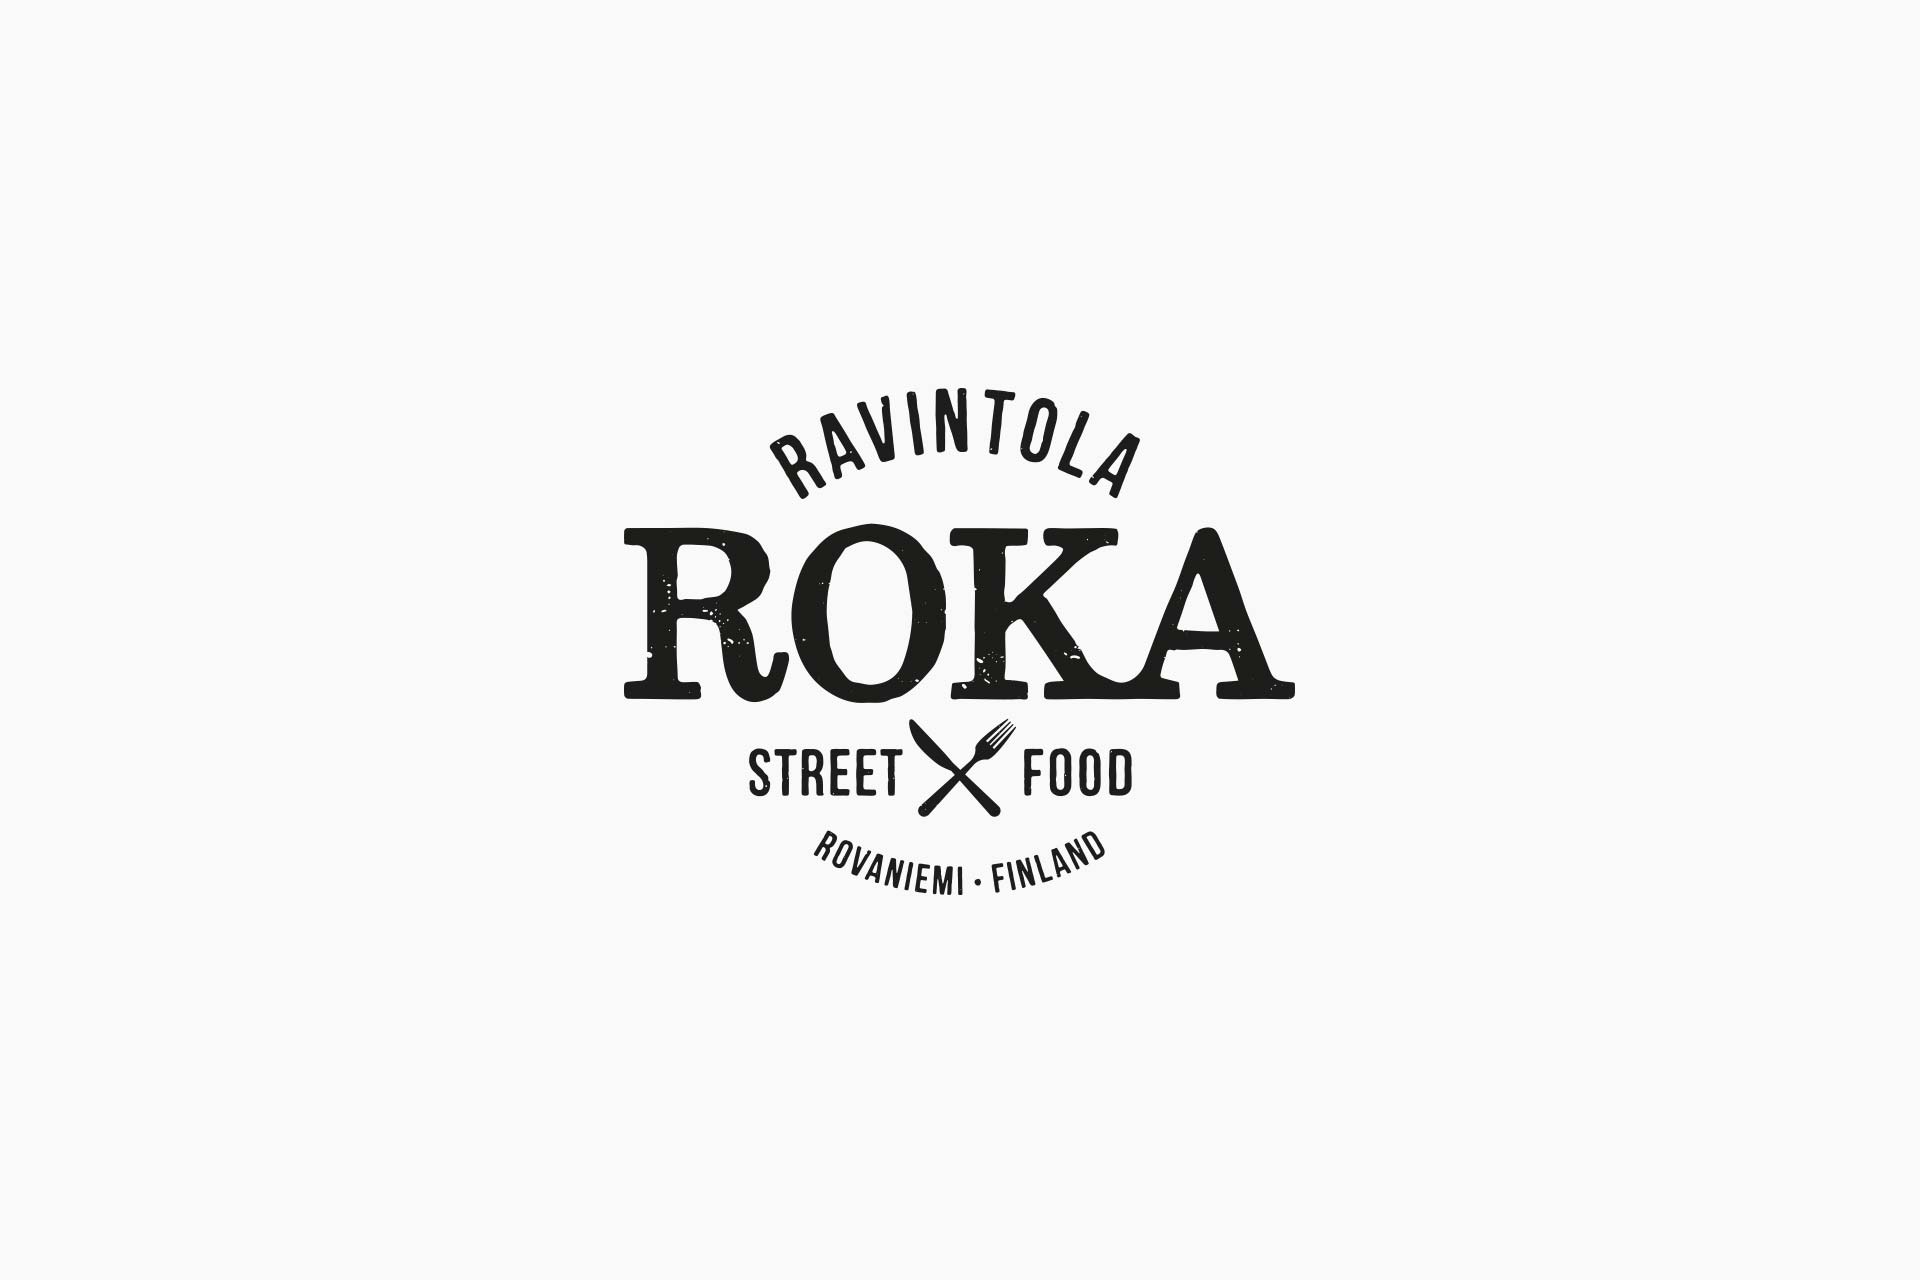 Ravintola Roka logo